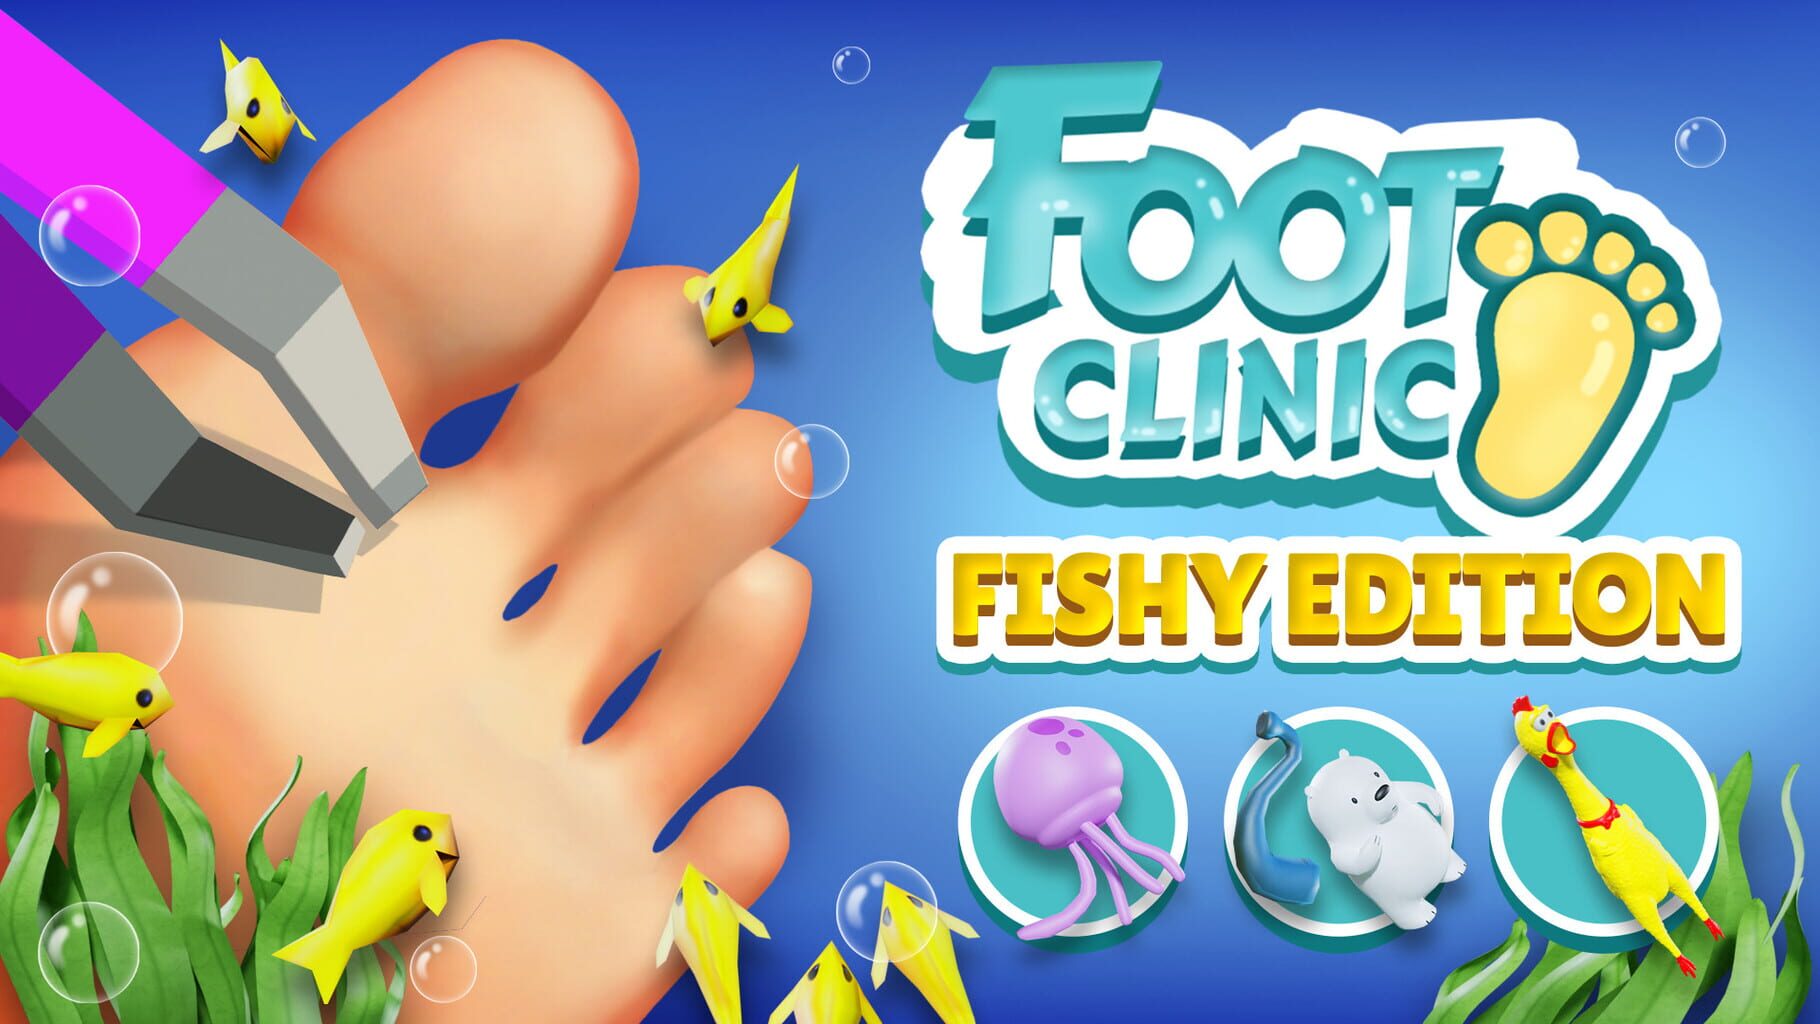 Foot Clinic: Fishy Edition artwork